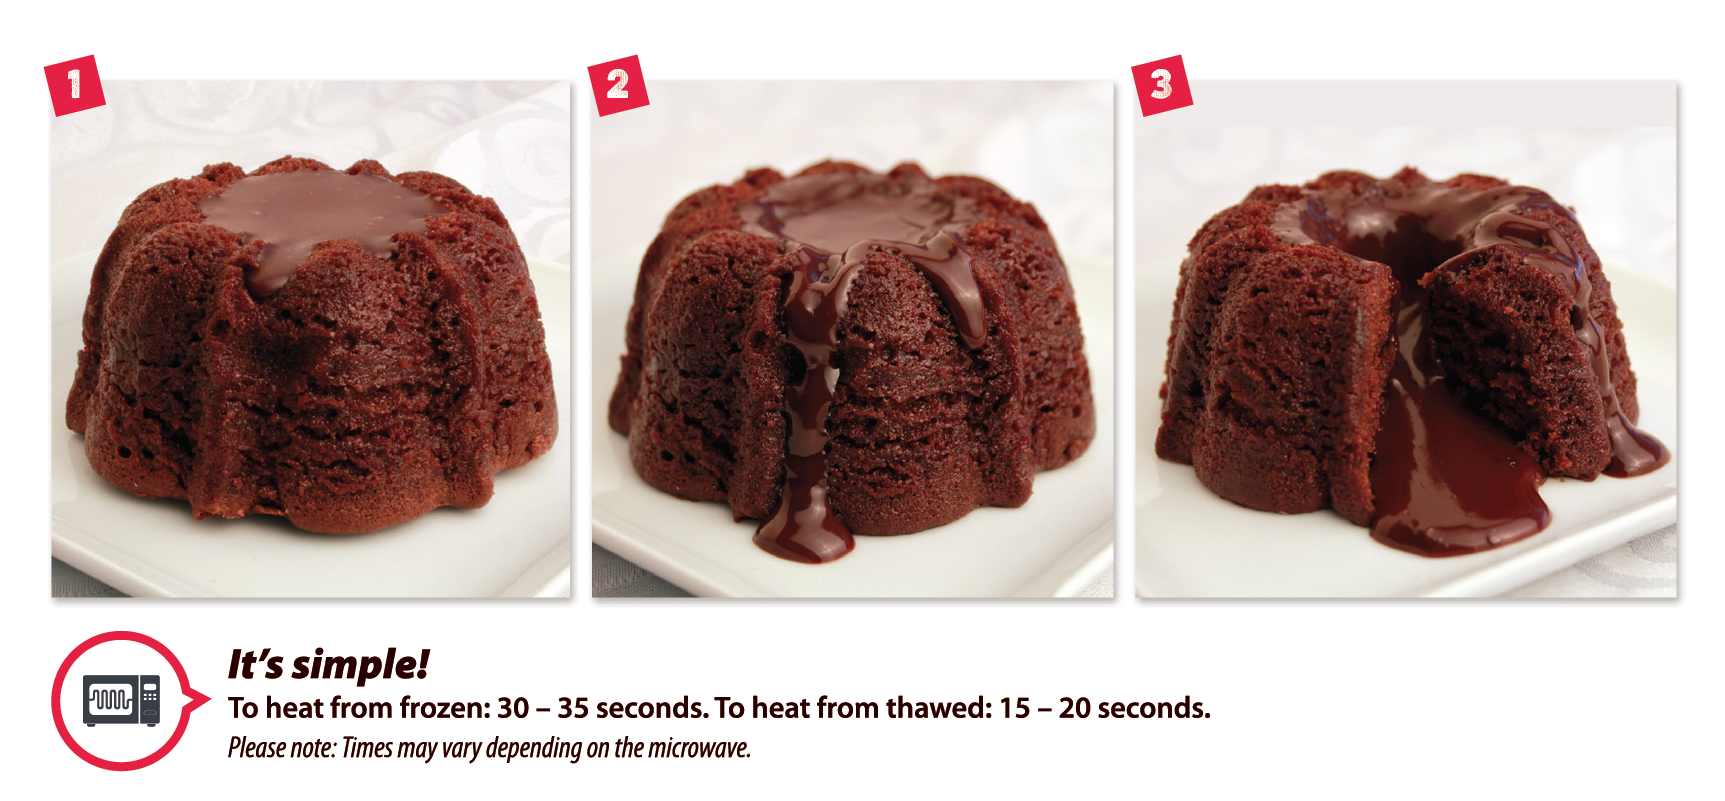 Volcano Cake Recipe: How to Make It